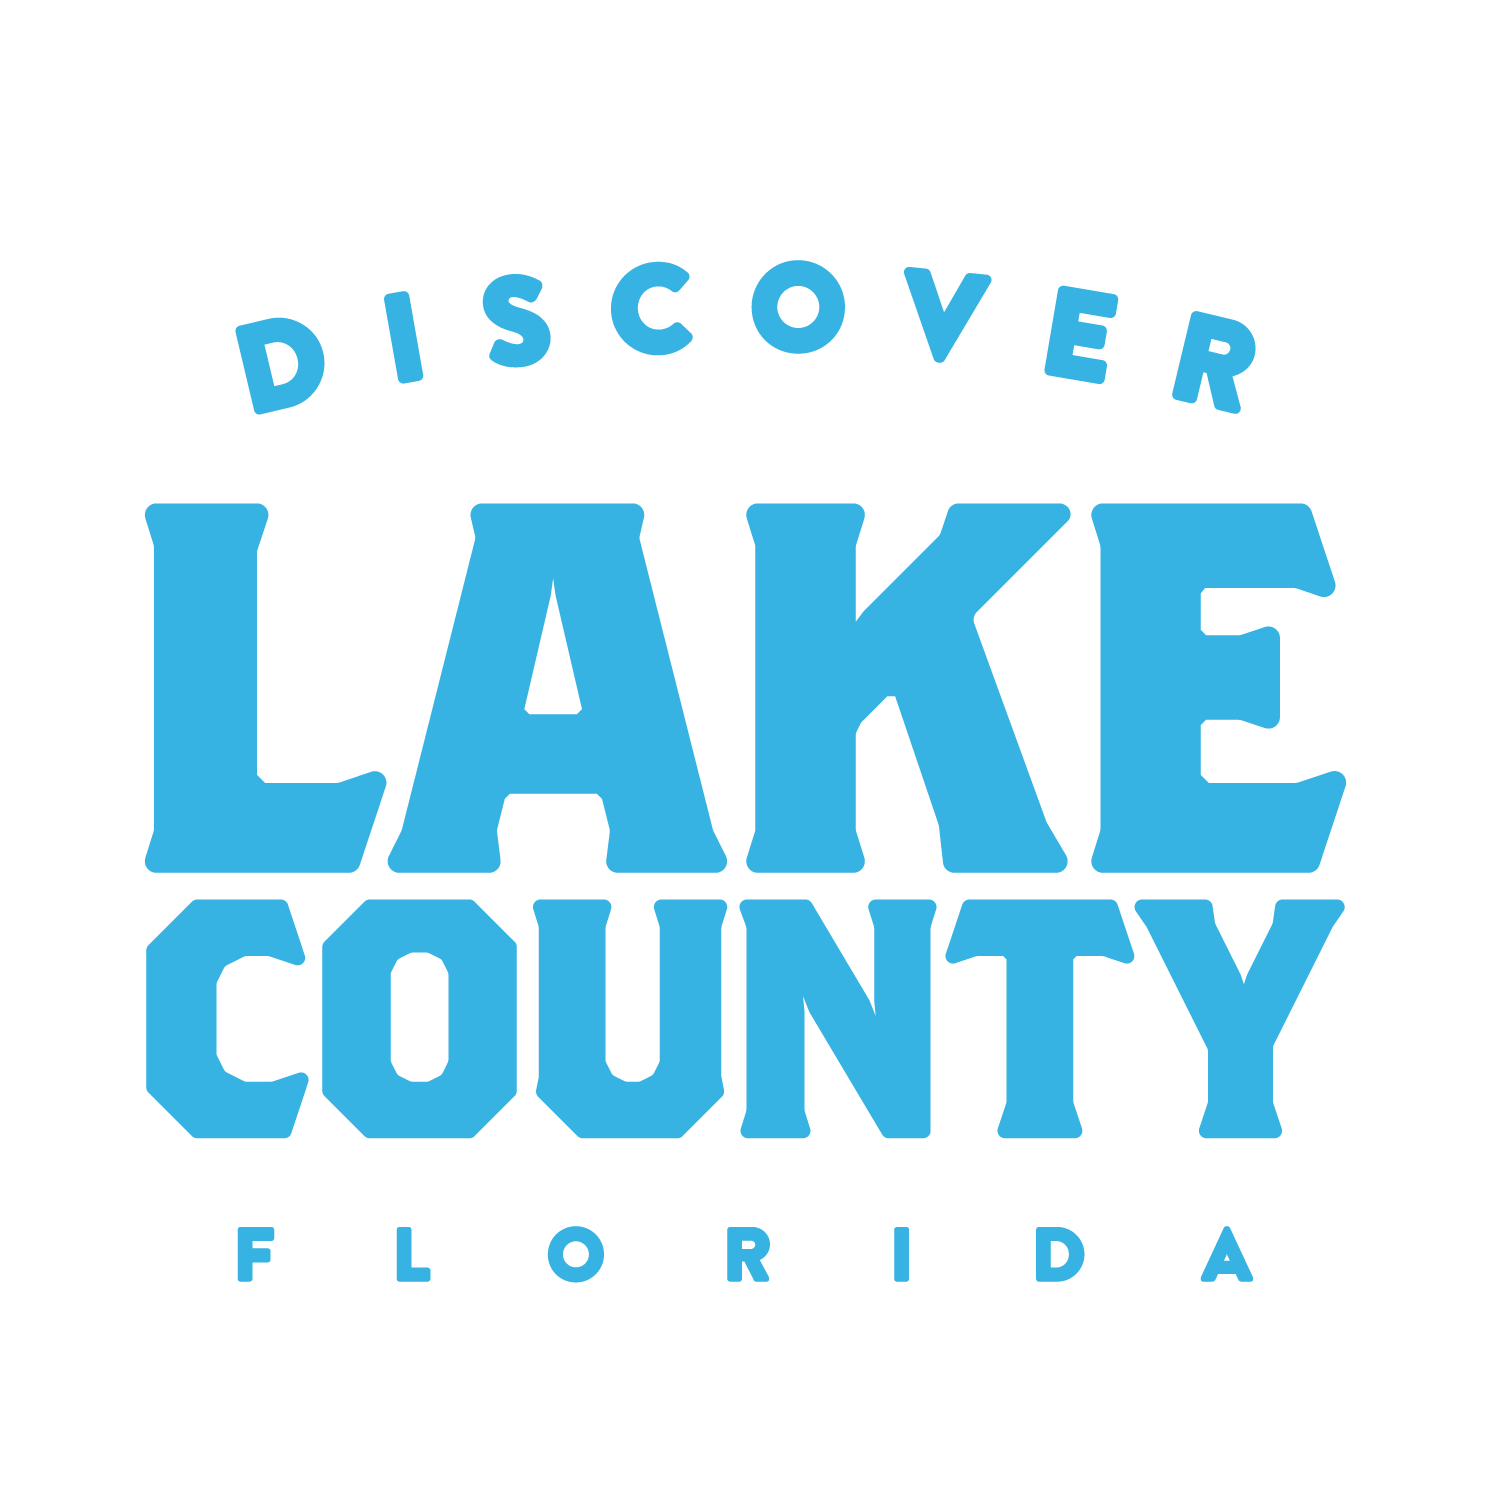 Lake Co. Logo (square).png